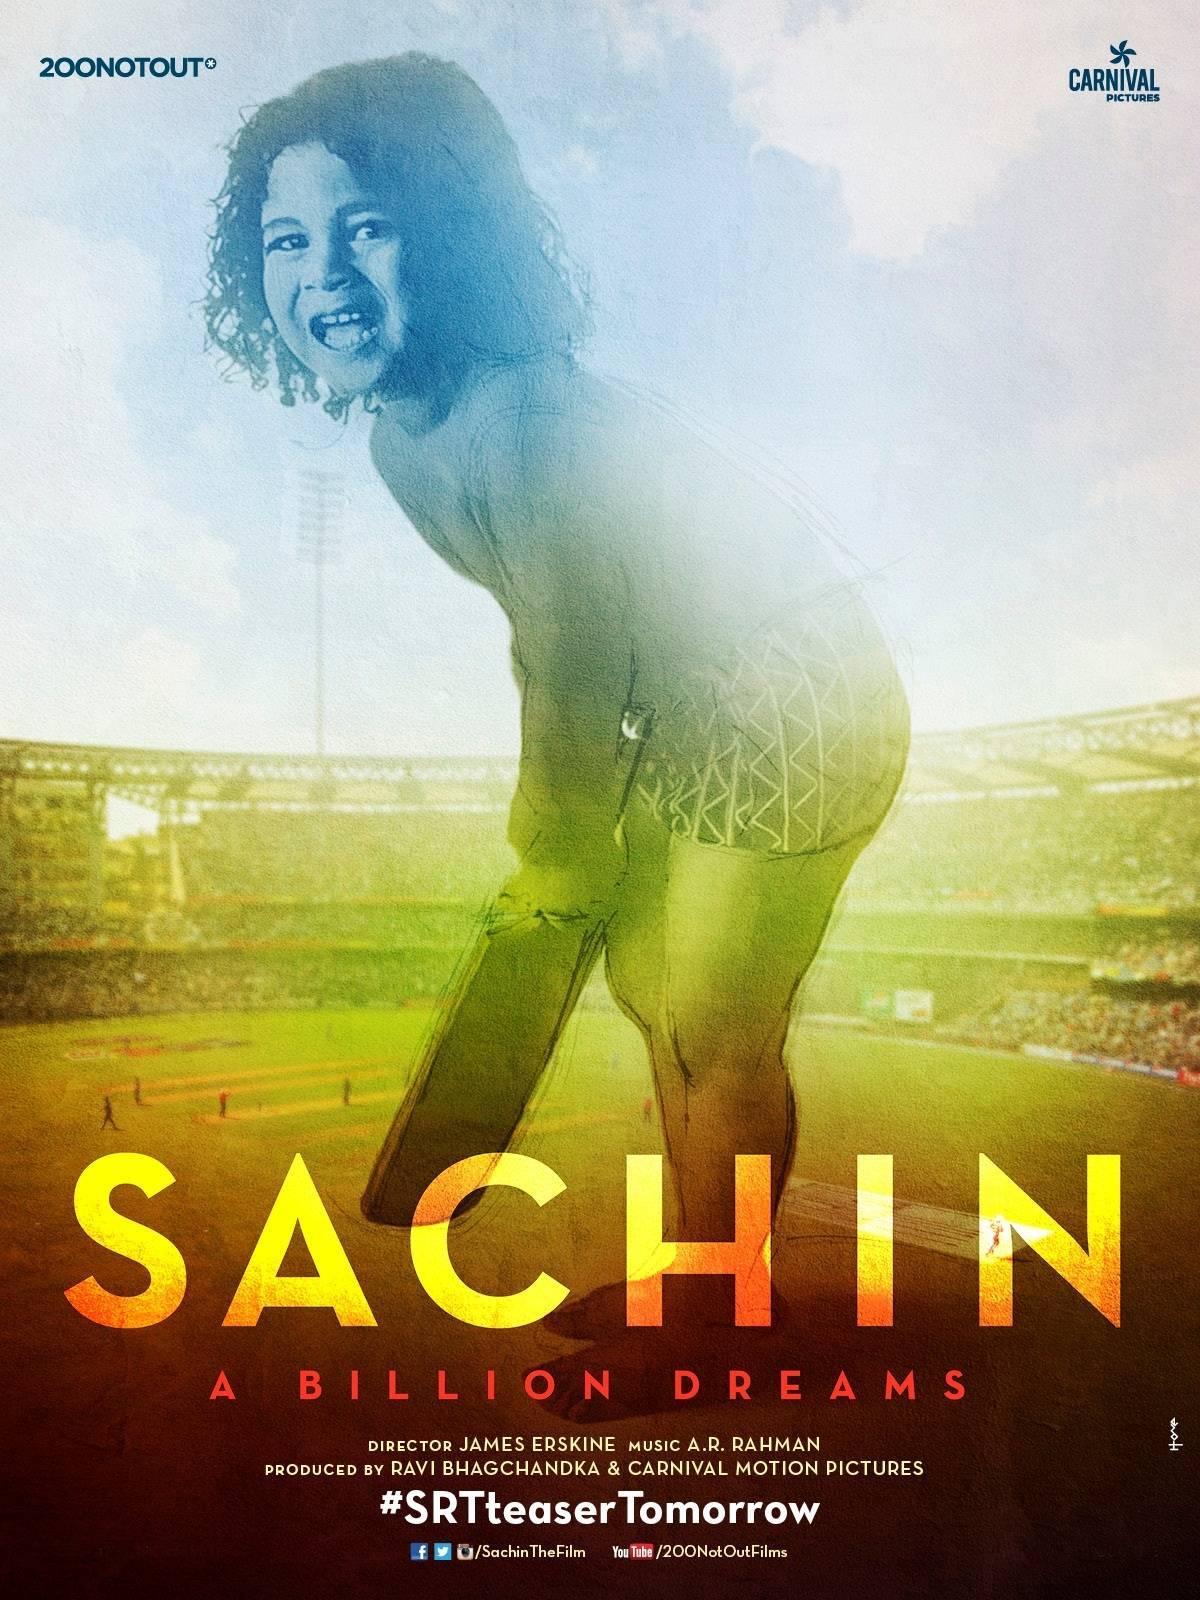 Sachin A Billion Dreams Movie Review & Rating - Public Talk, Audience